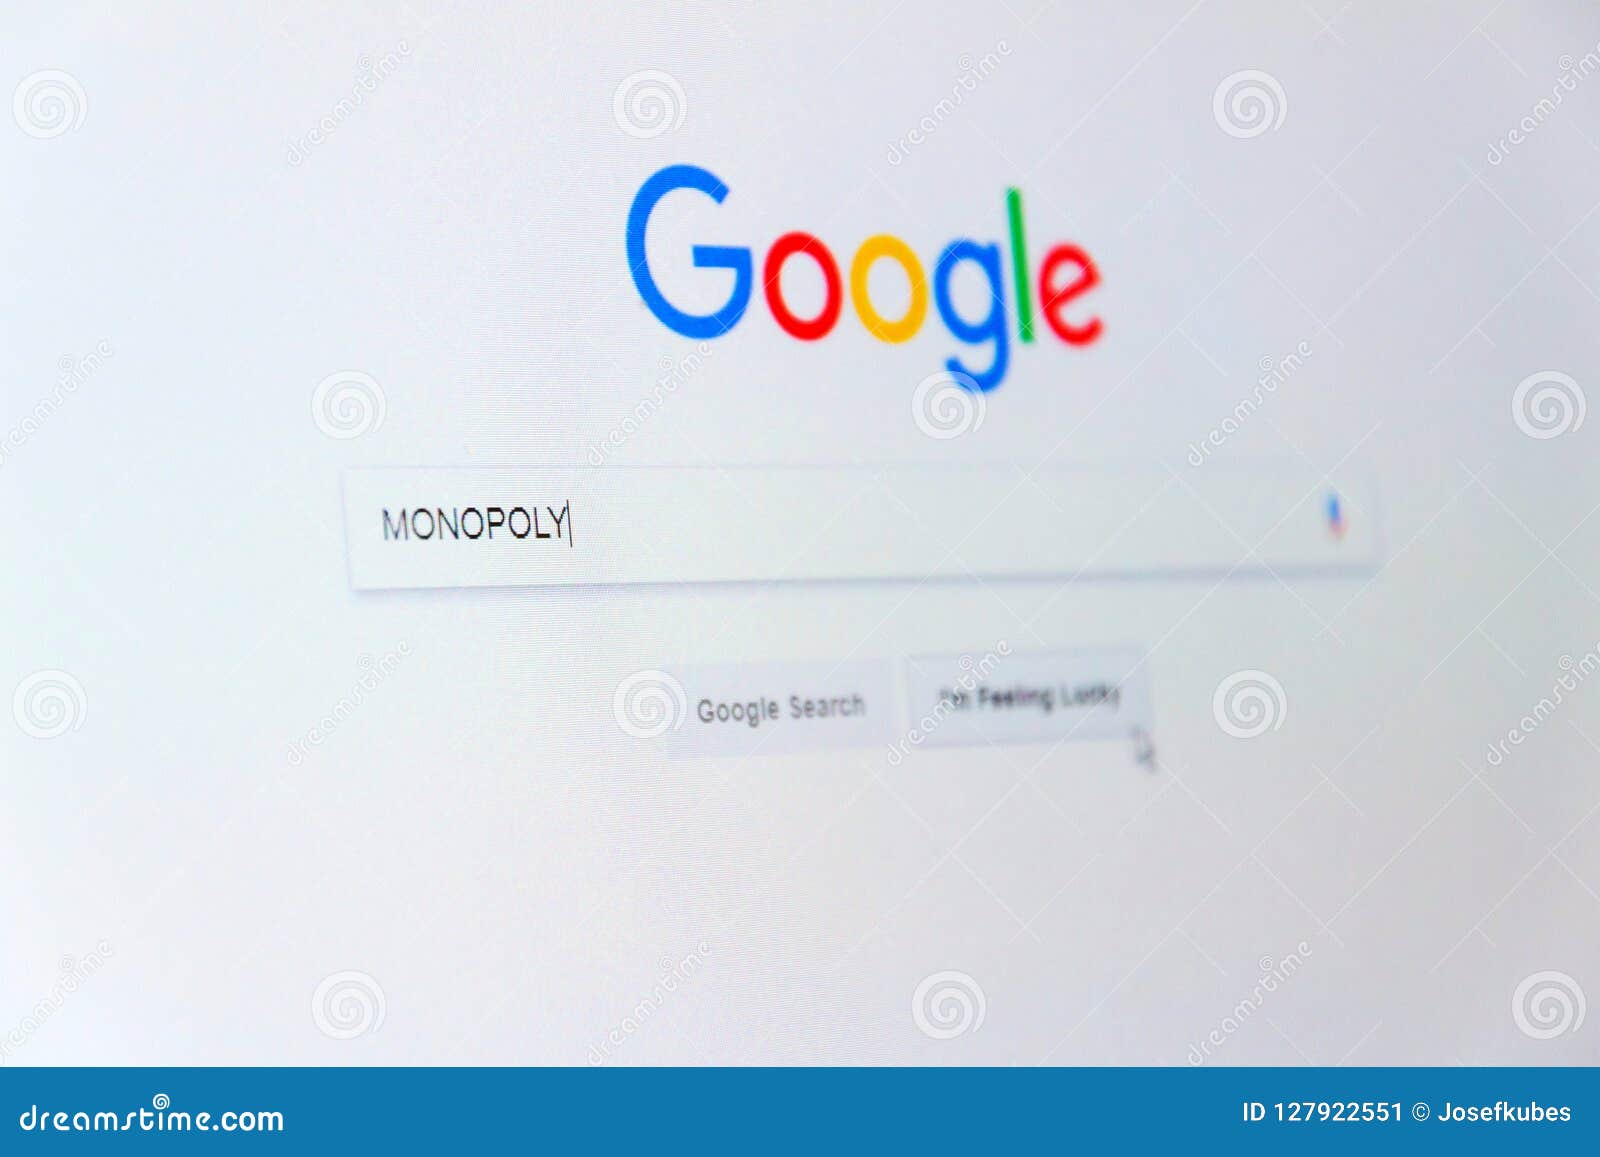 Google Inc An American Search Engine Company